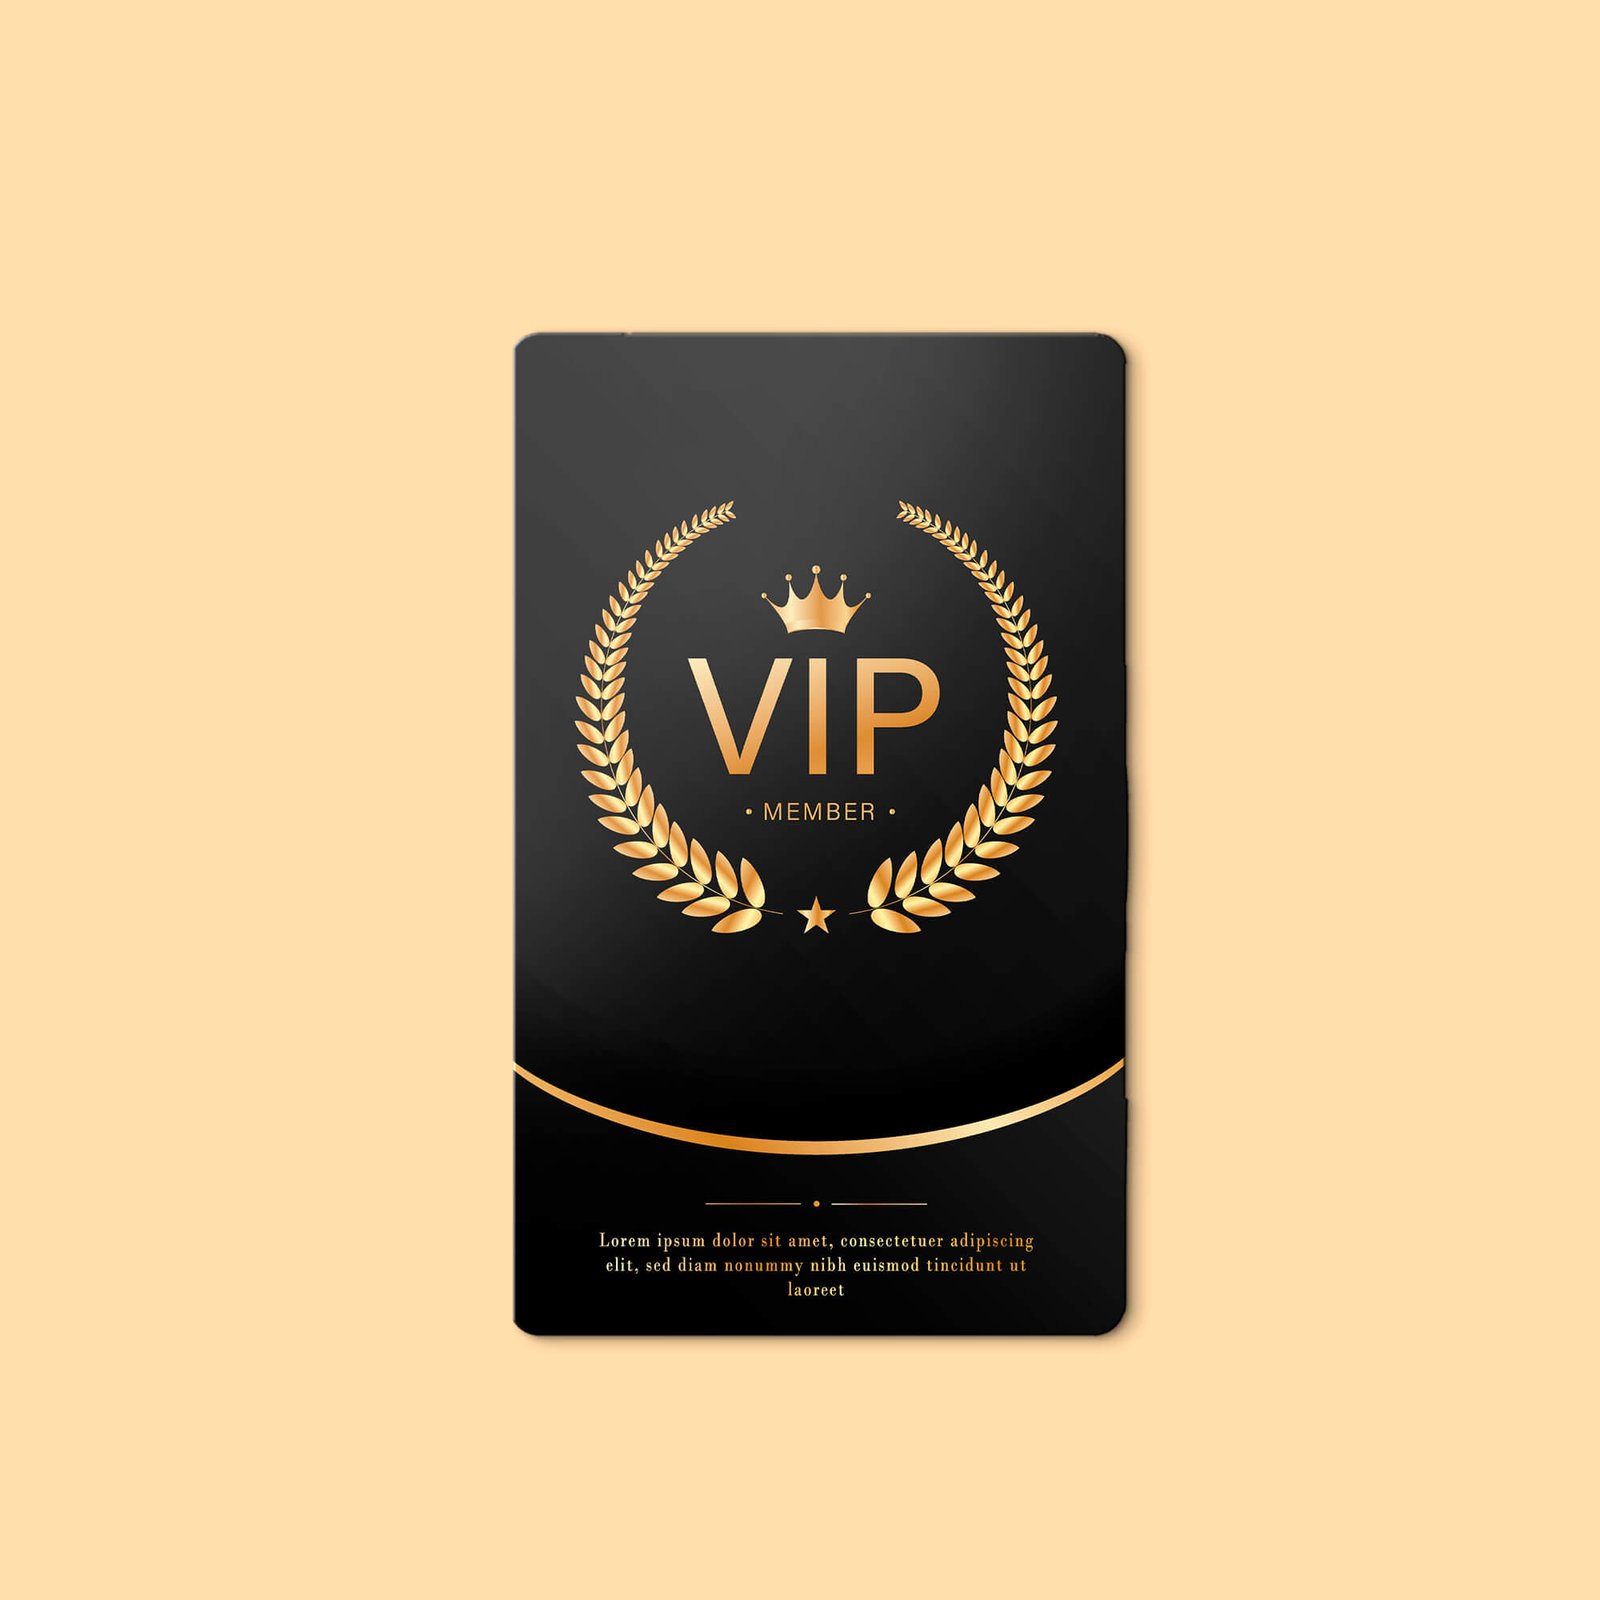 Design Free VIP Card Mockup PSD Template